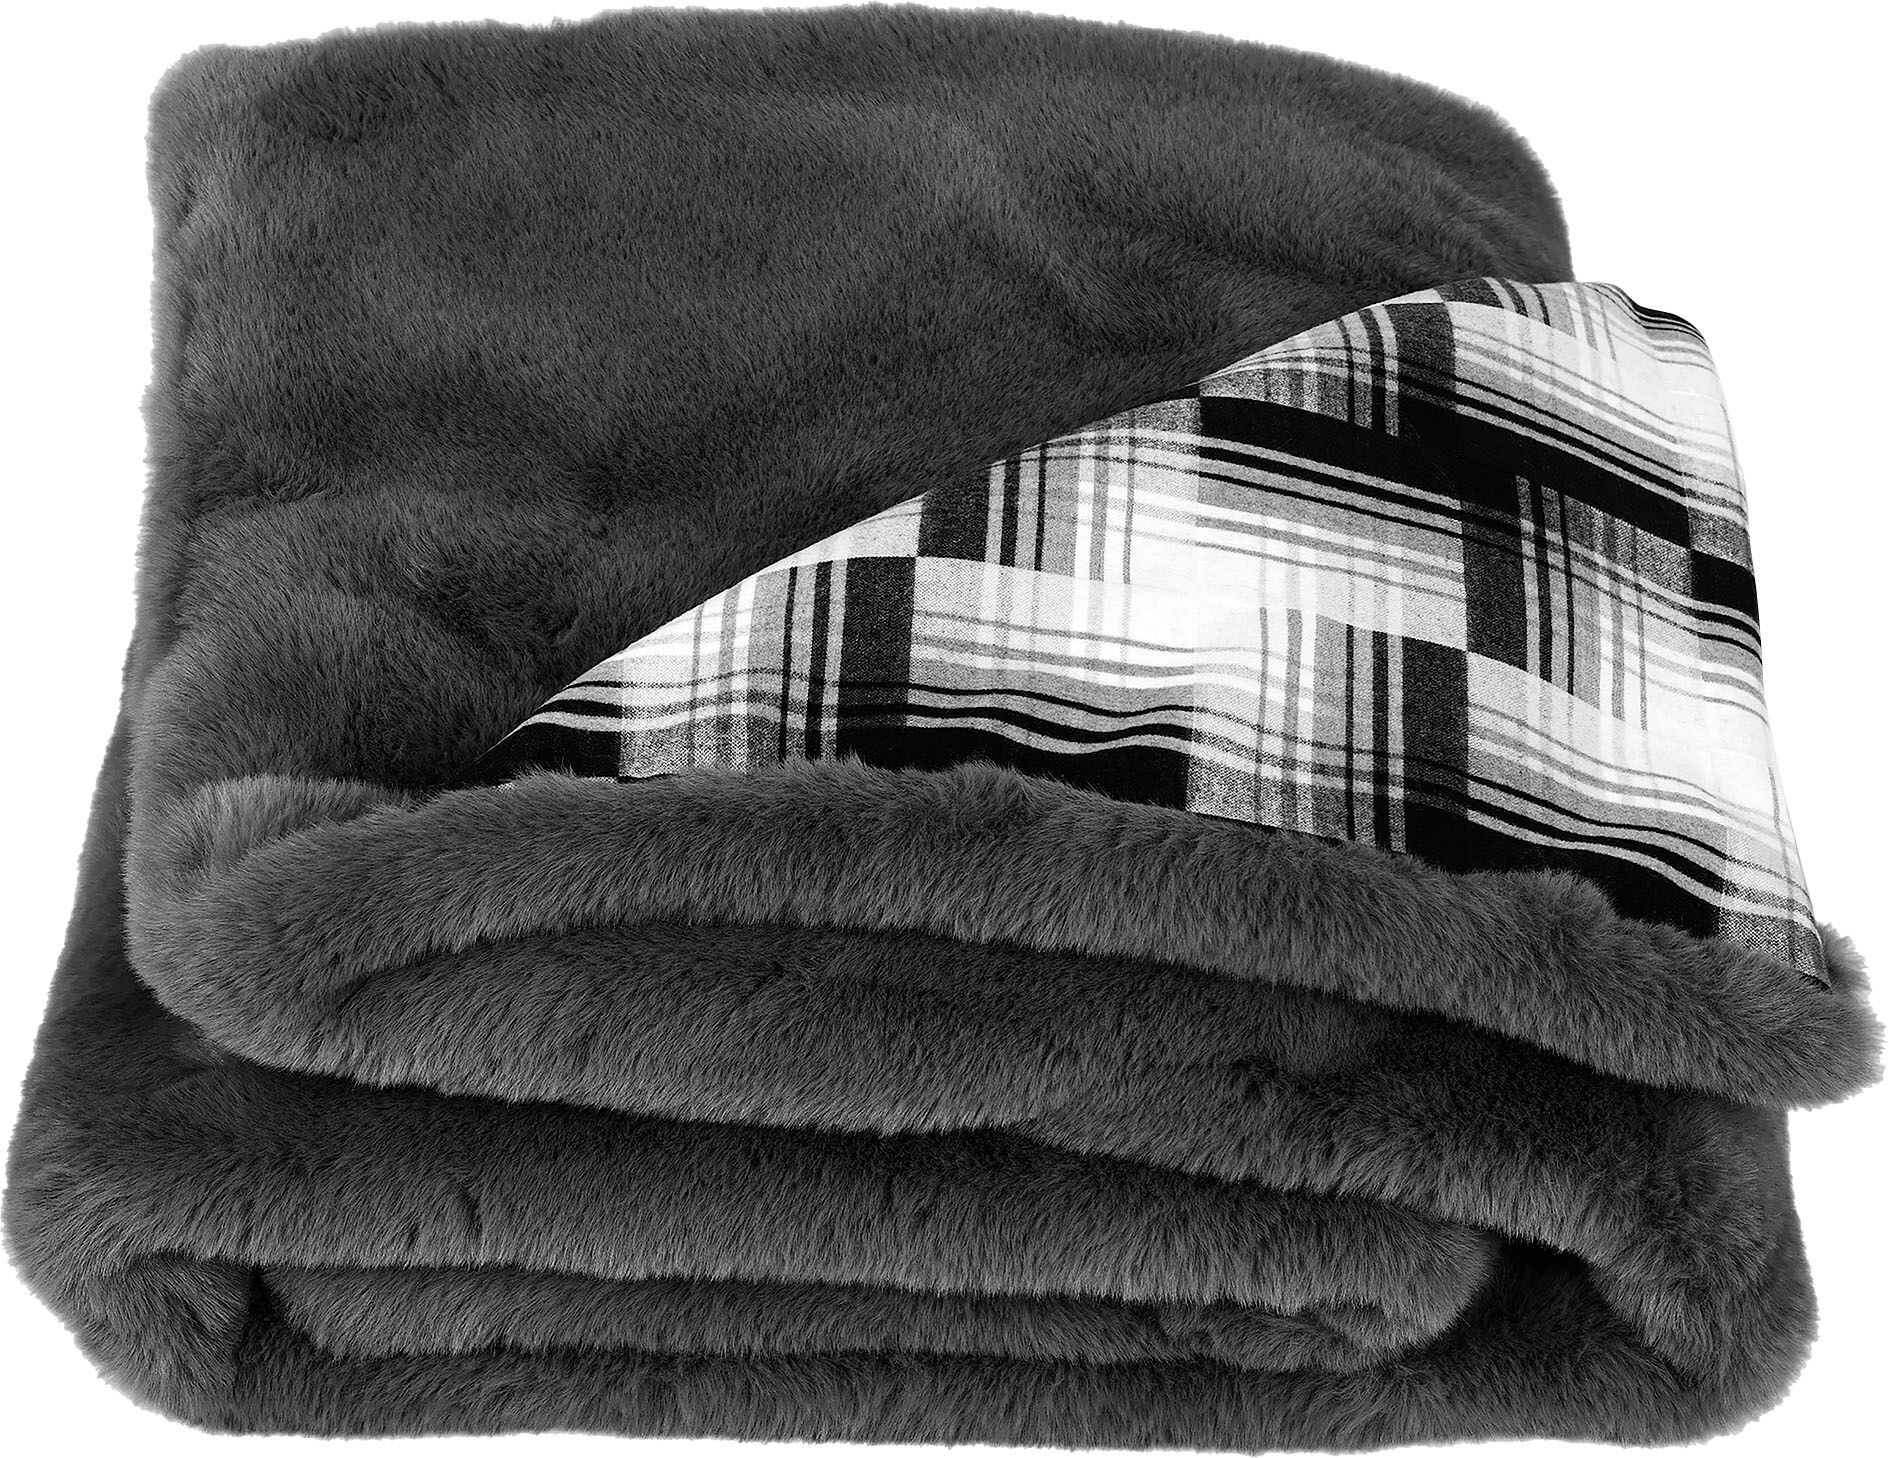 Star Home Textil Wohndecke »Amala«, mit weichem Karomuster grau